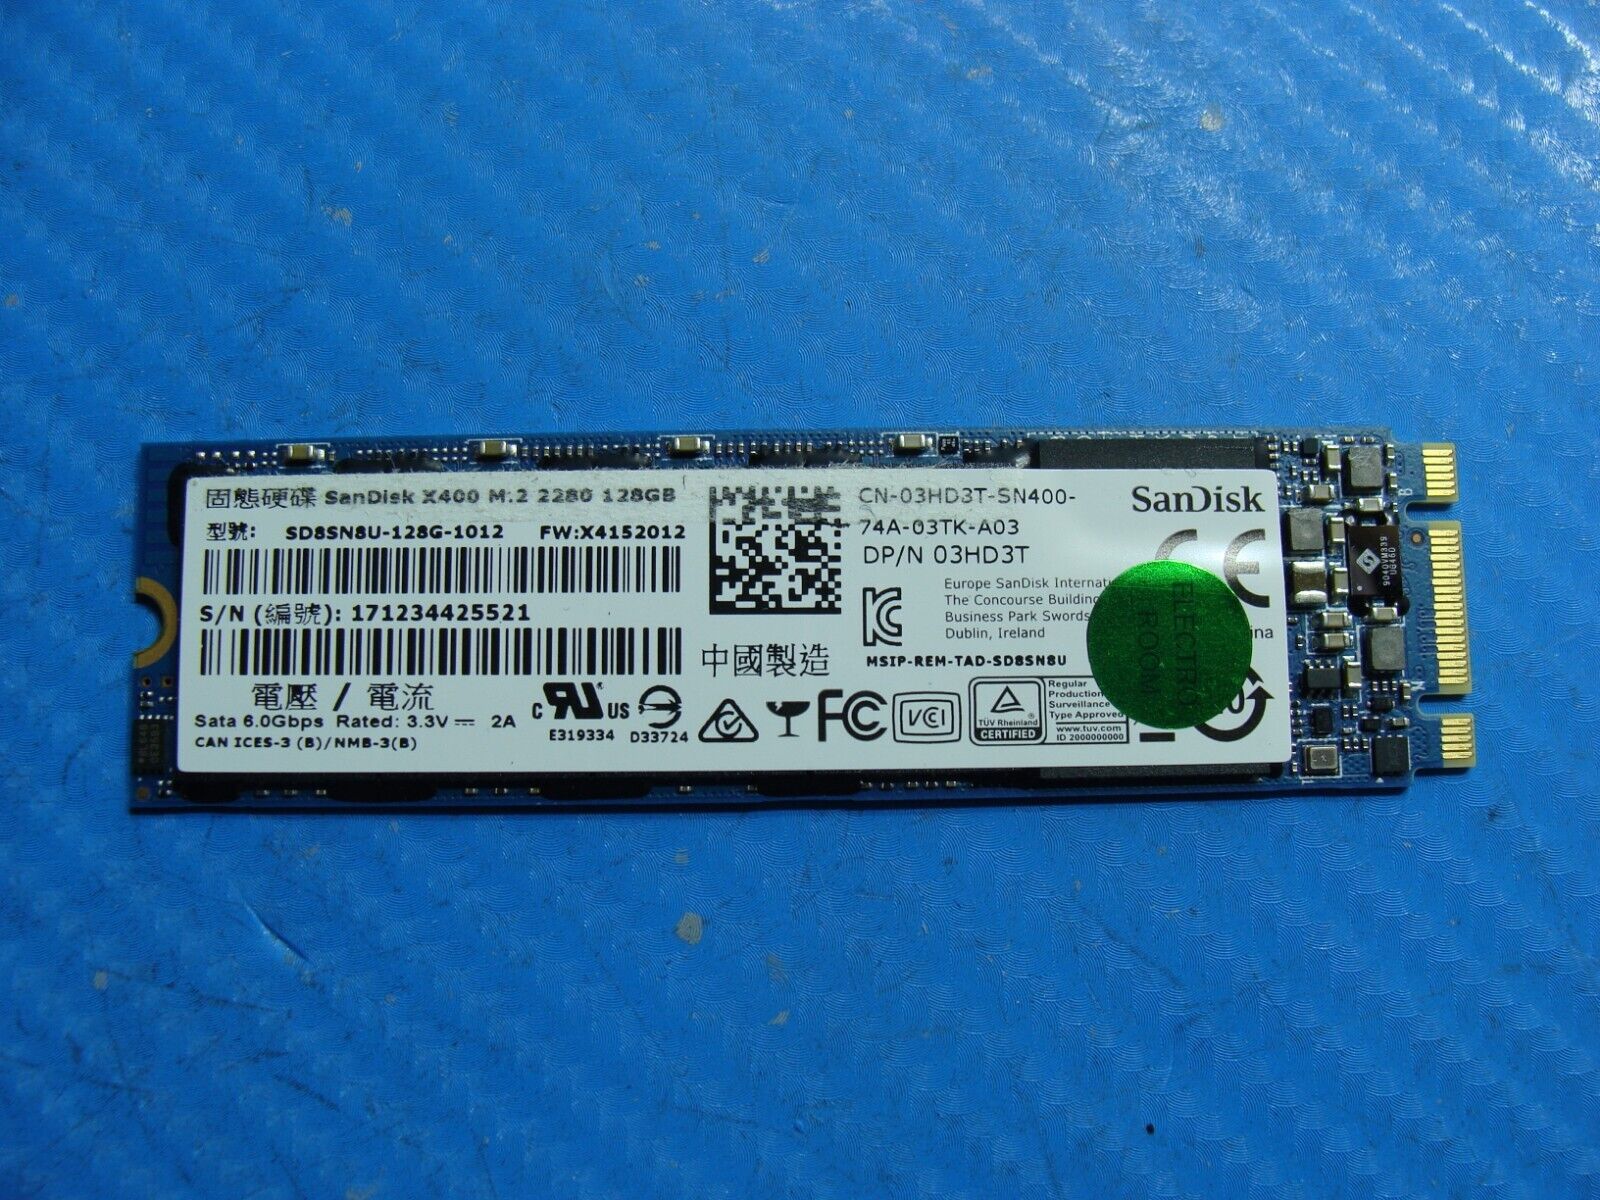 Dell 5480 SanDisk 128Gb Sata M.2 Ssd Solid State Drive SD8SN8U-128G-1012 3HD3T